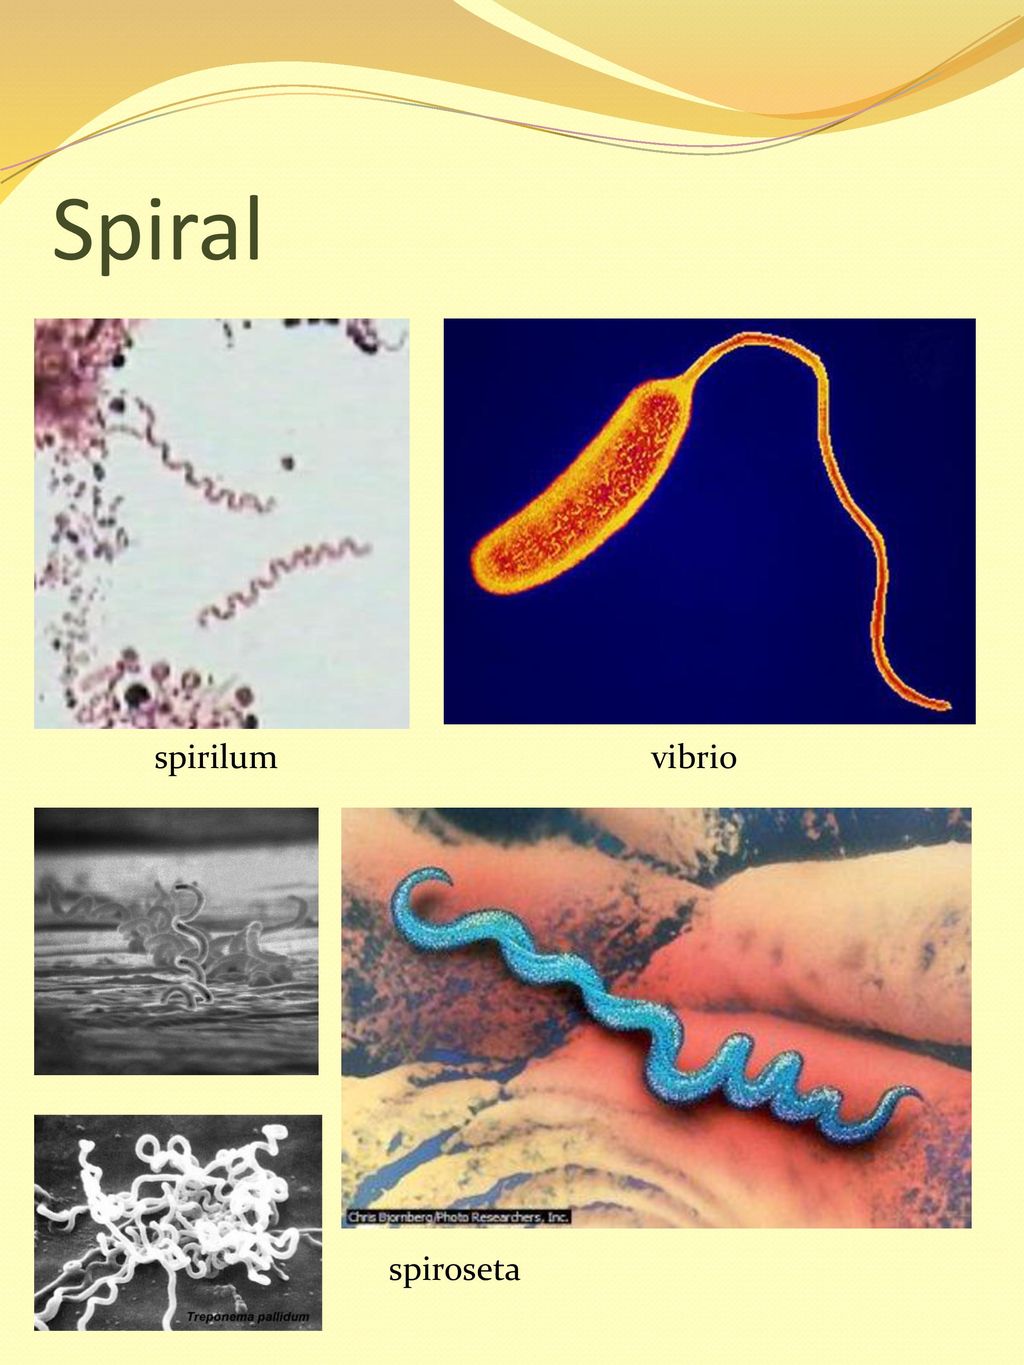 Spiral spirilum vibrio spiroseta